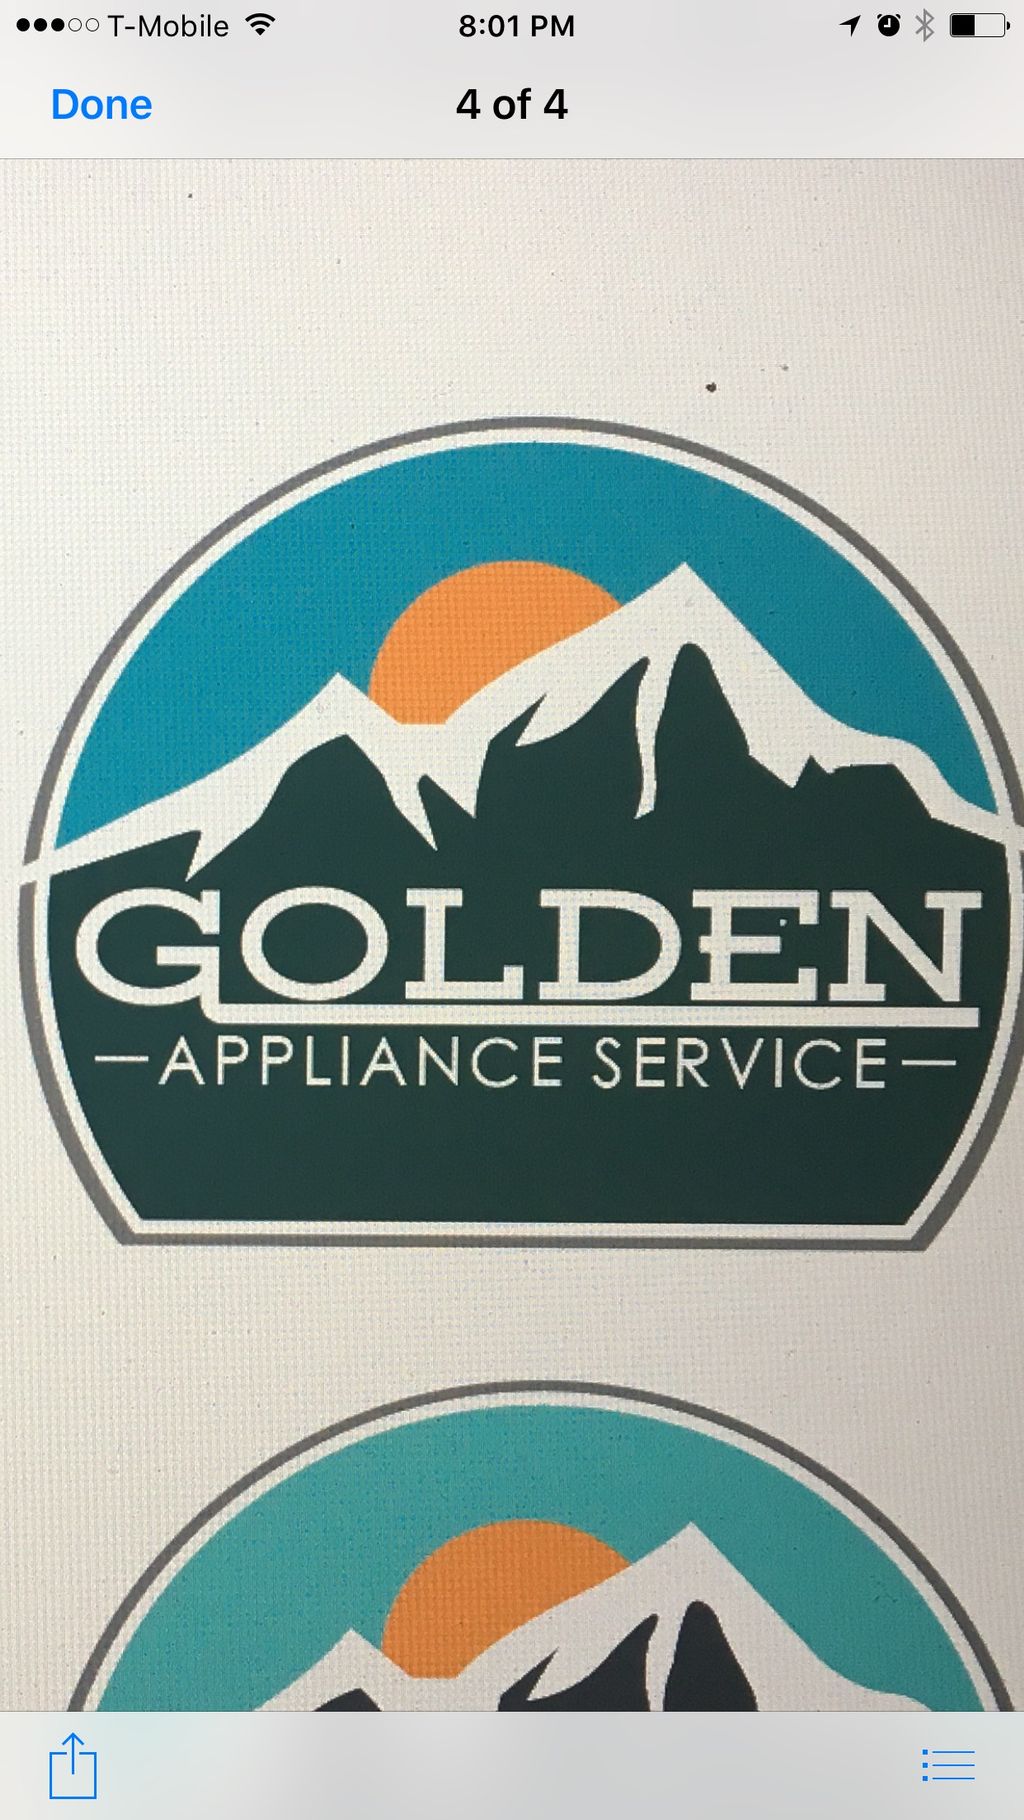 Golden Appliance Service